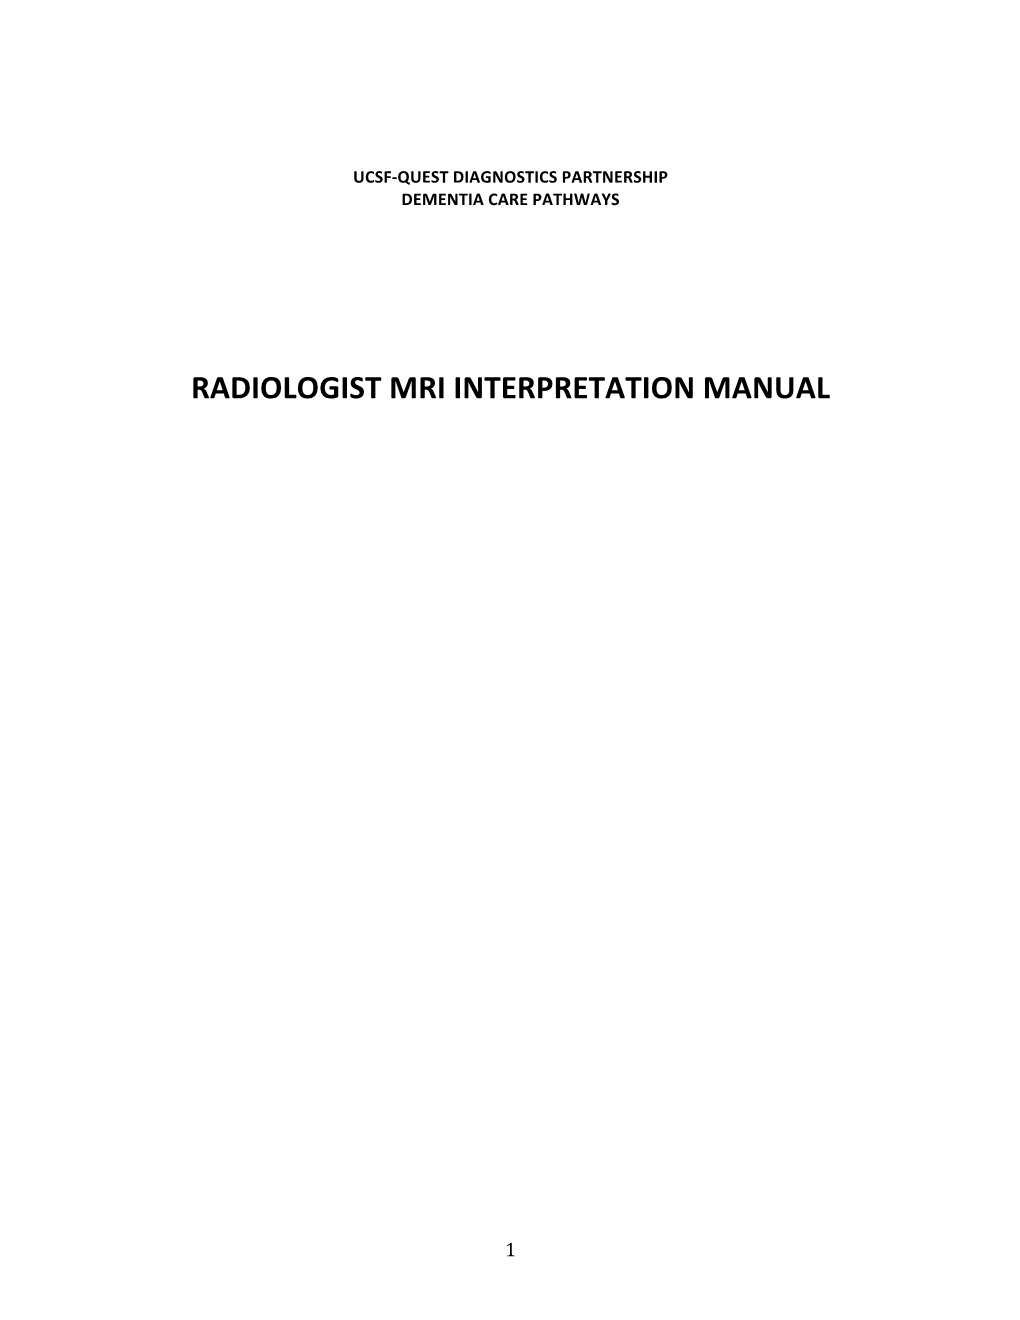 Radiologist Mri Interpretation Manual